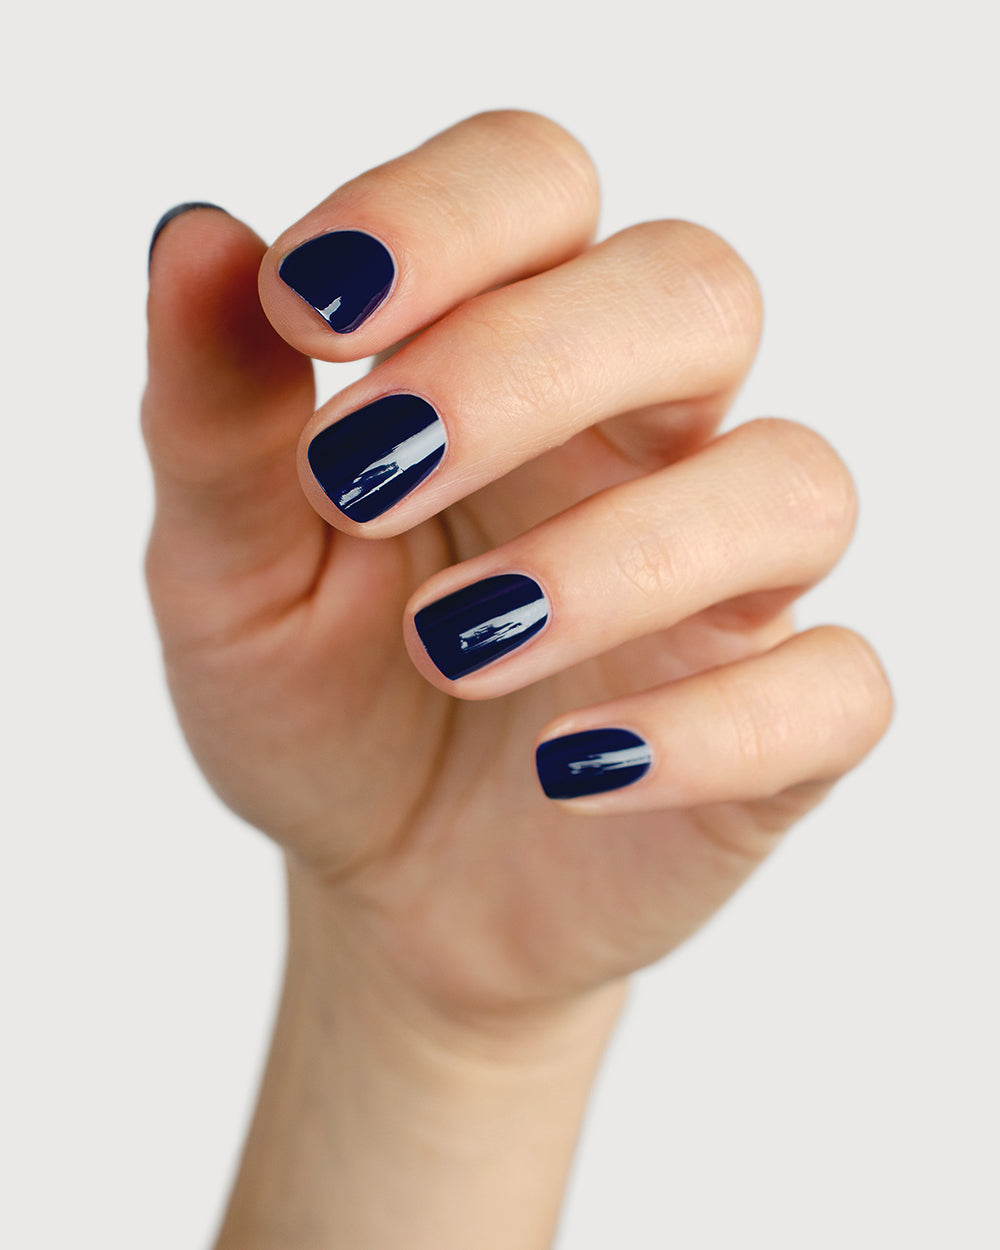 Classic navy blue nail polish hand swatch on fair skin tone